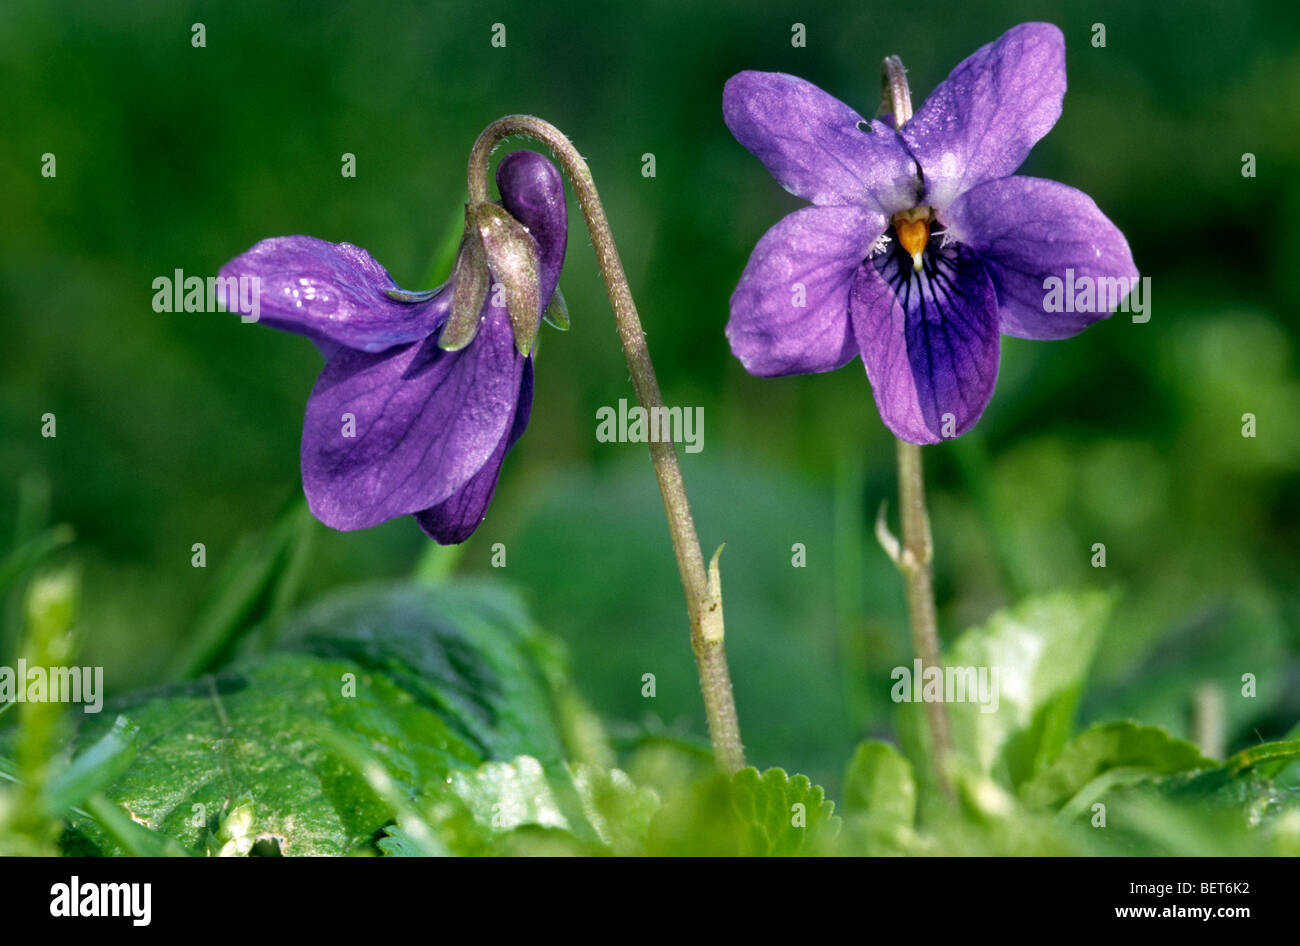 Bois violet / violet doux / French violet / violet / jardin commun violette (Viola odorata) en fleurs au printemps Banque D'Images